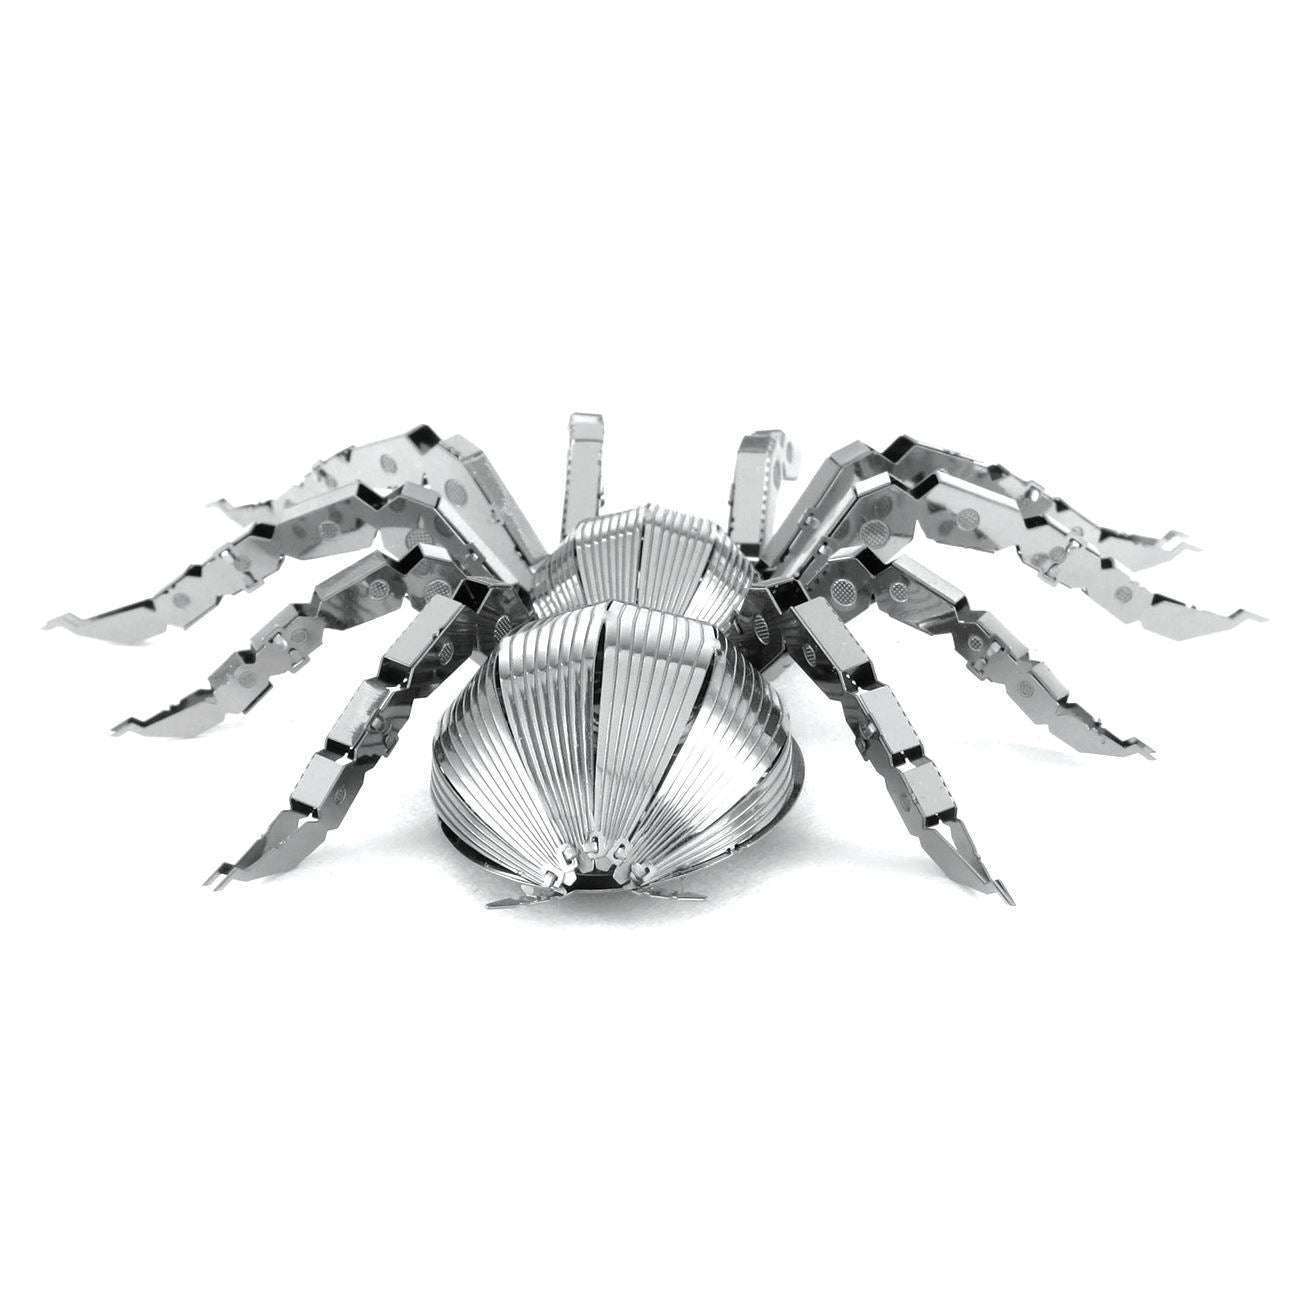 Tarantula Spider 3D Laser Cut Model Kit